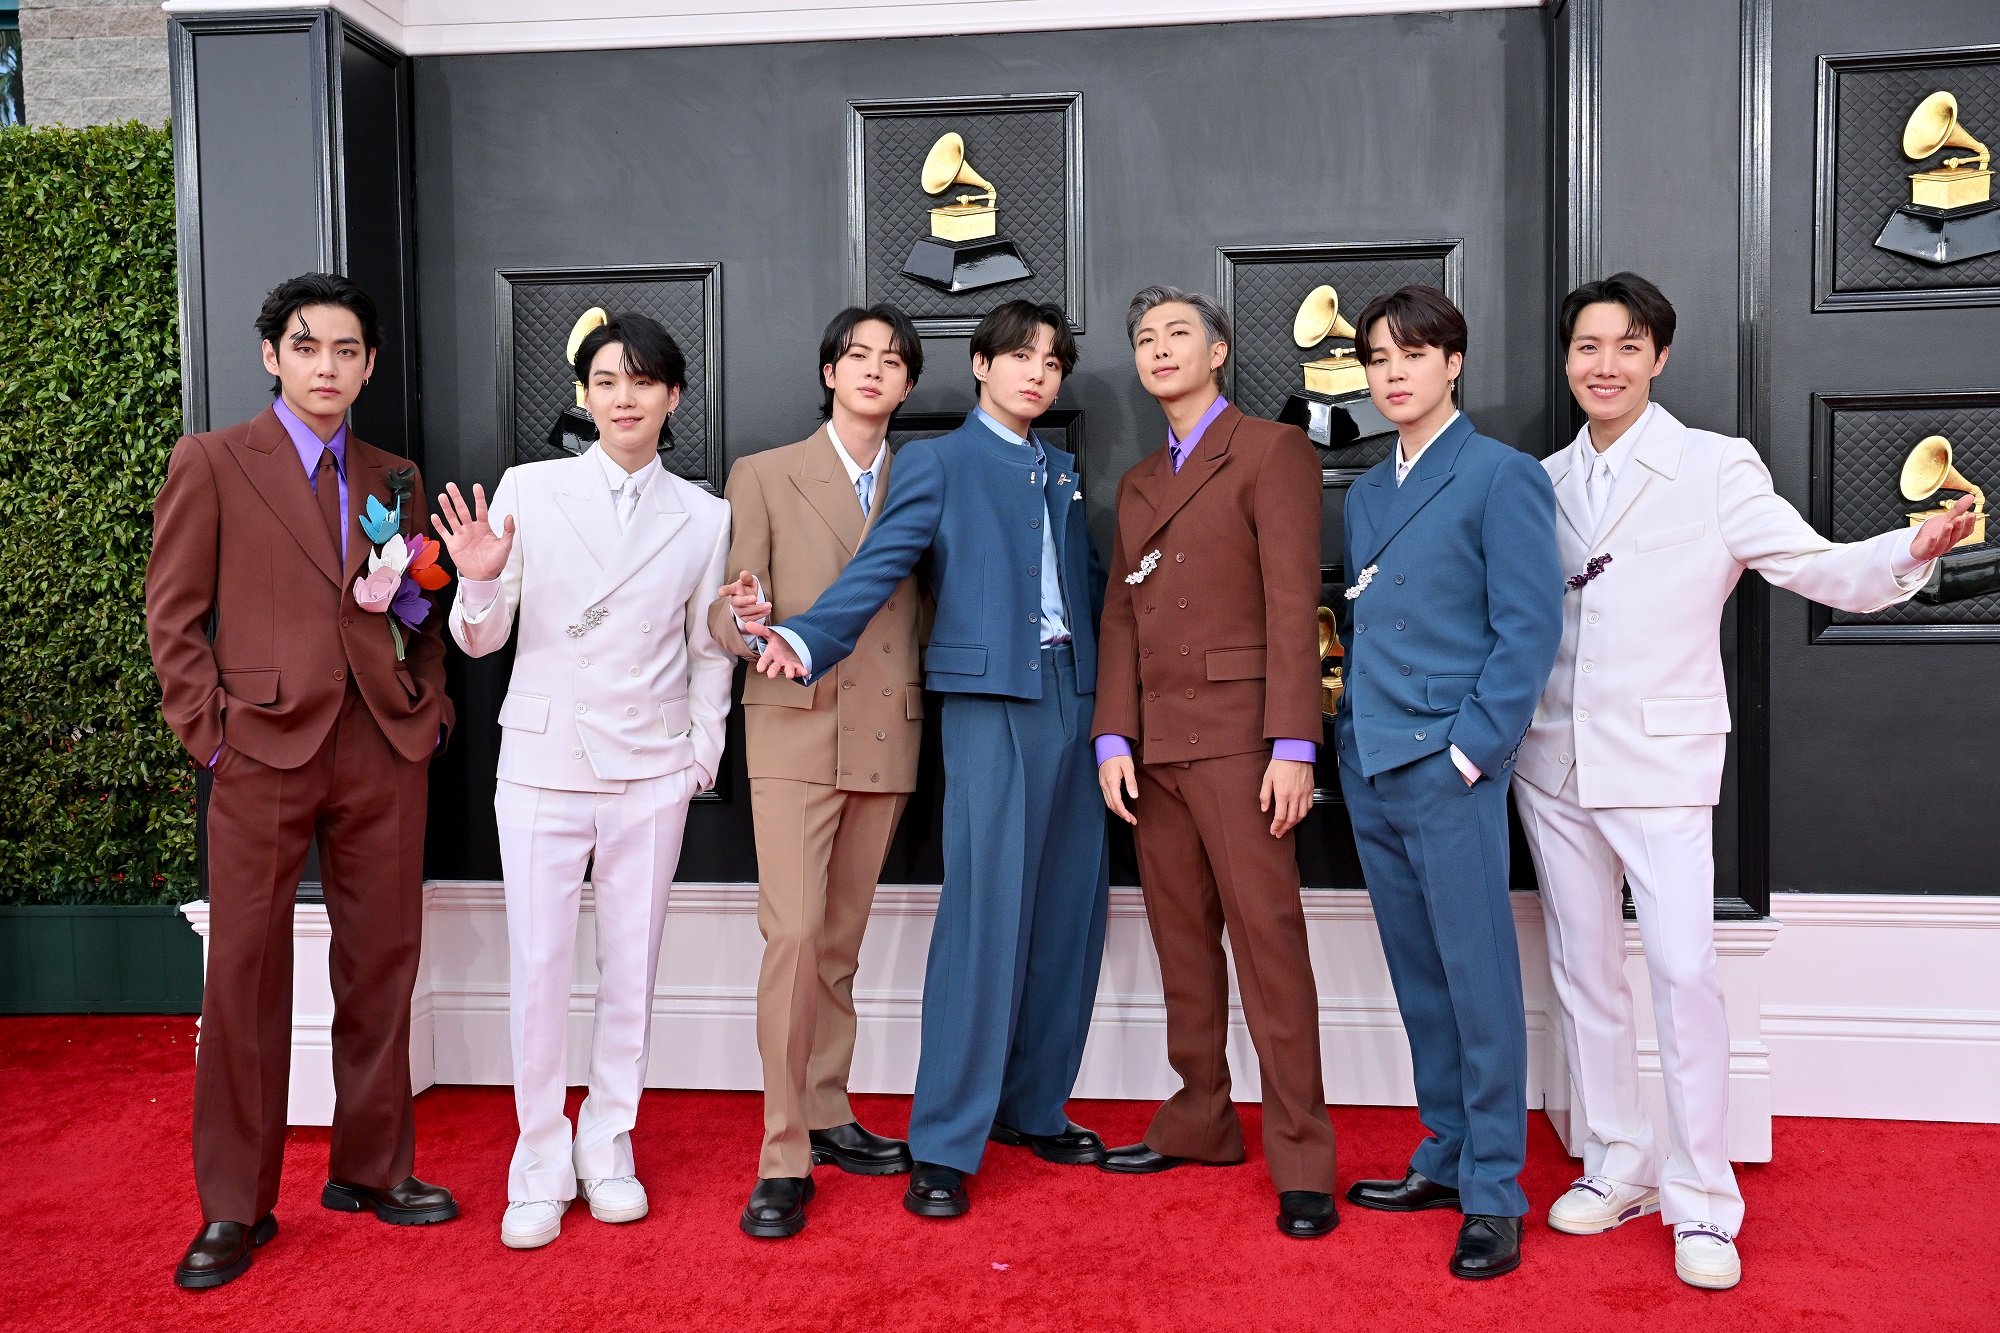 V, Suga, Jin, Jungkook, RM, Jimin, and J-Hope of BTS attend the 2022 Grammy Awards